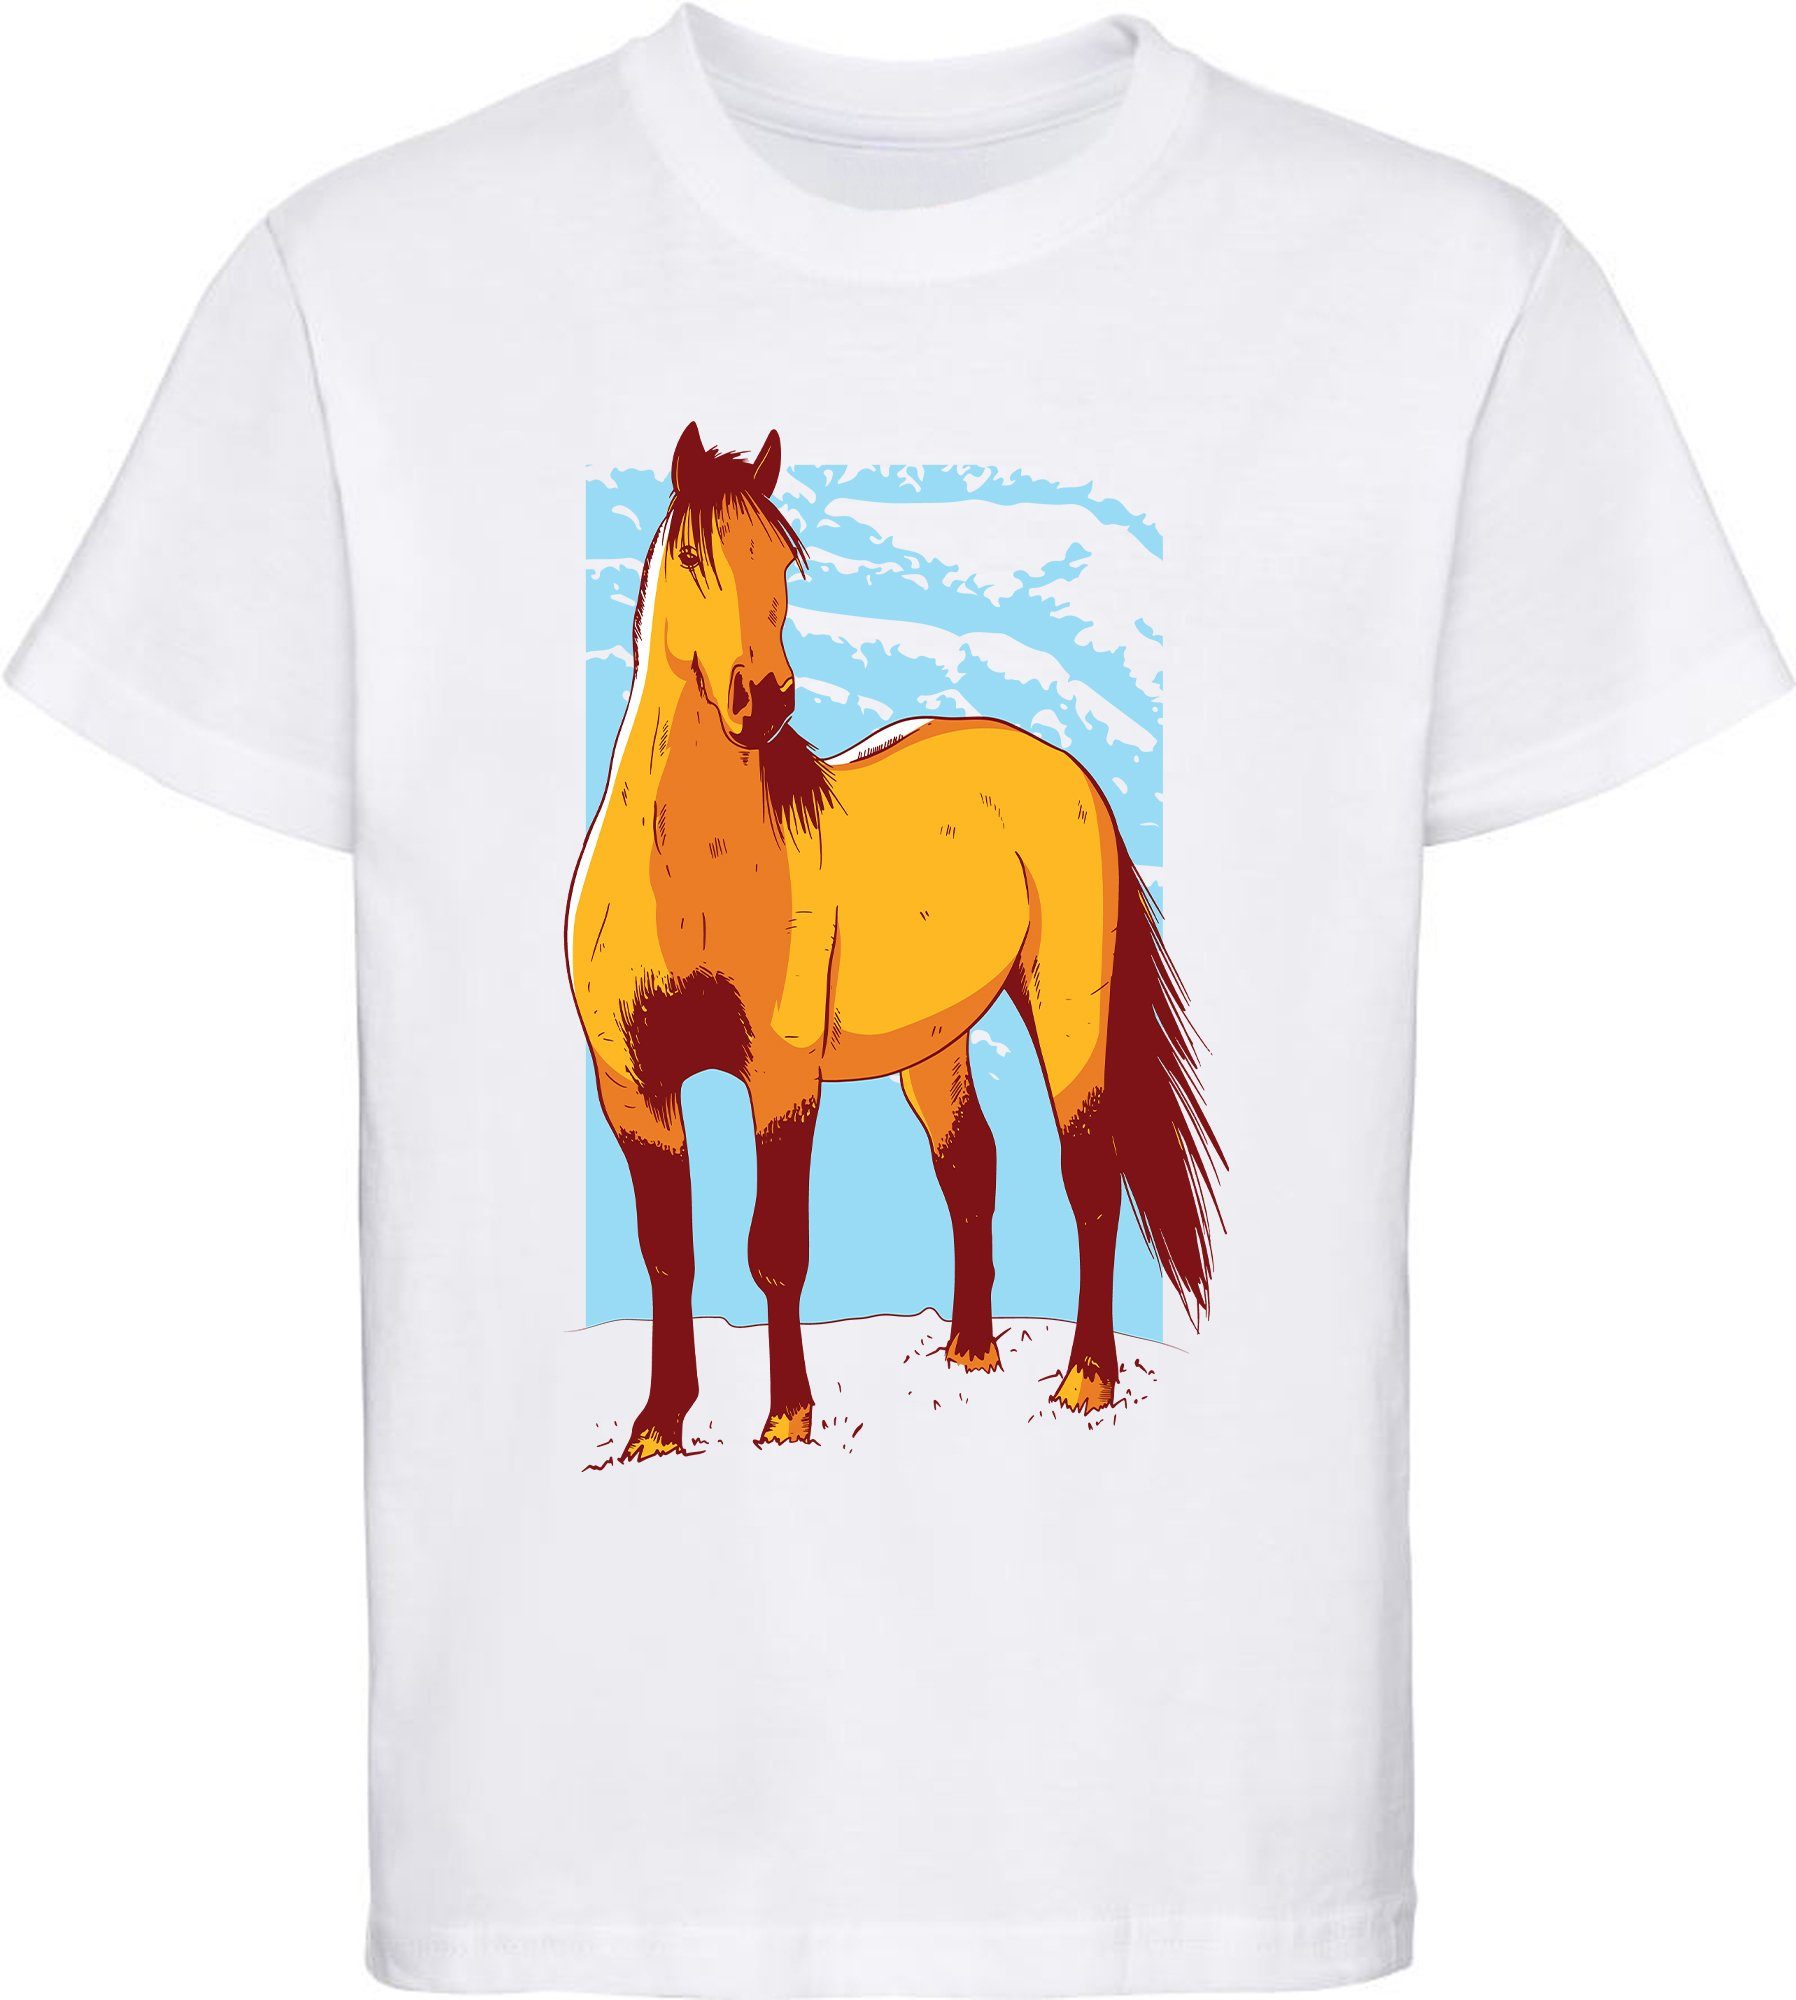 MyDesign24 Print-Shirt bedrucktes Mädchen T-Shirt elegantes Pferd Baumwollshirt mit Aufdruck, i155 weiss